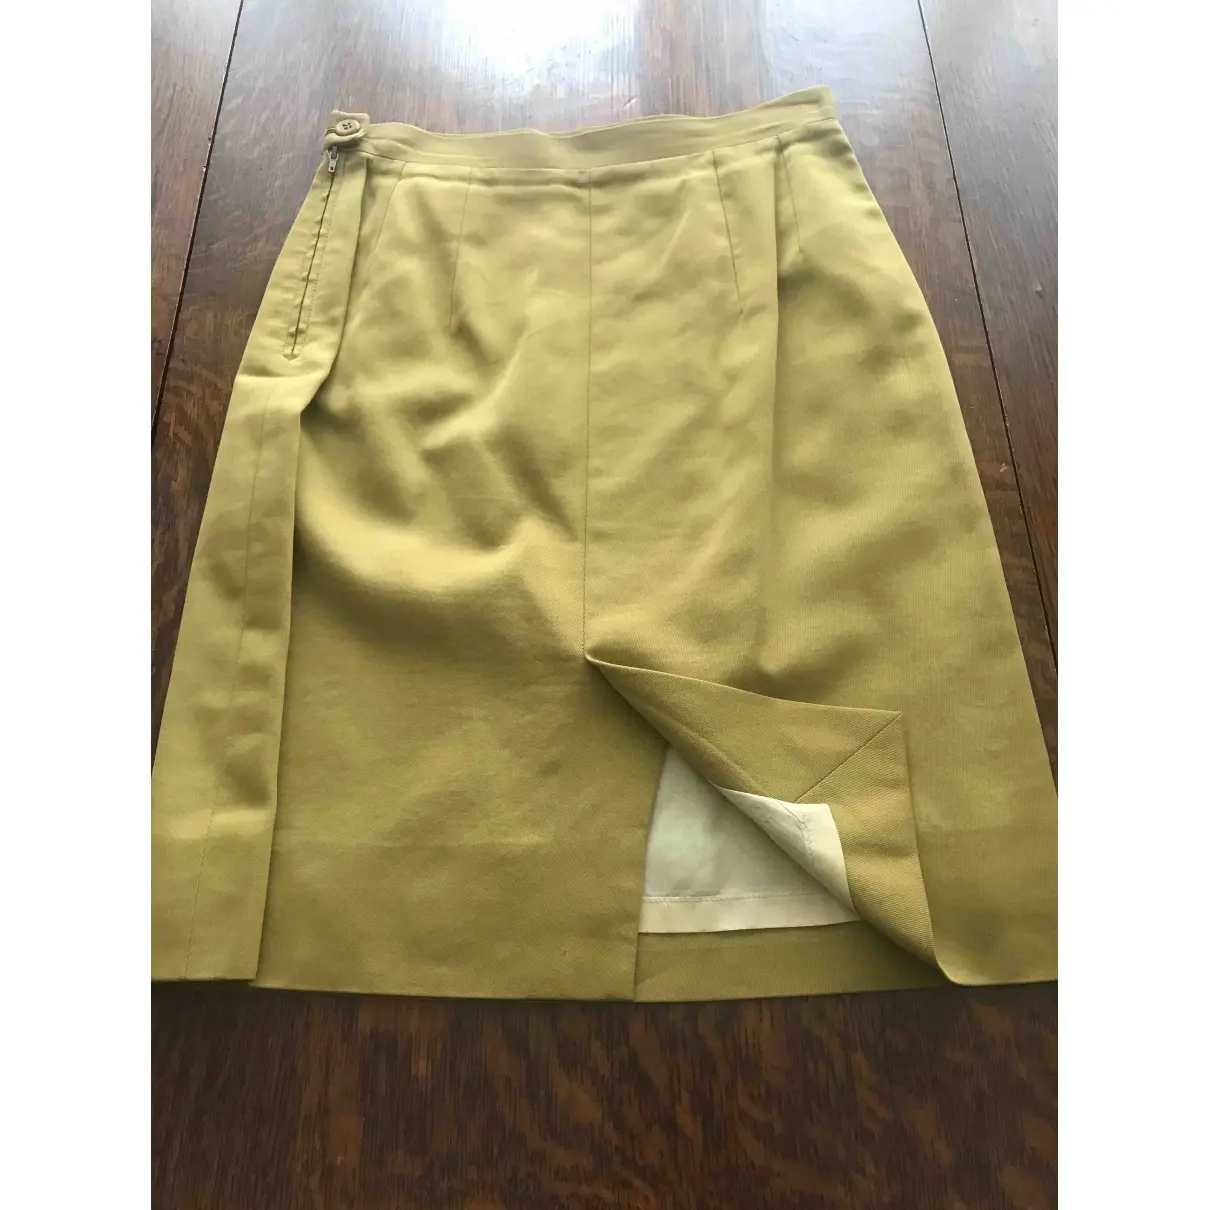 Buy Brioni Skirt suit online